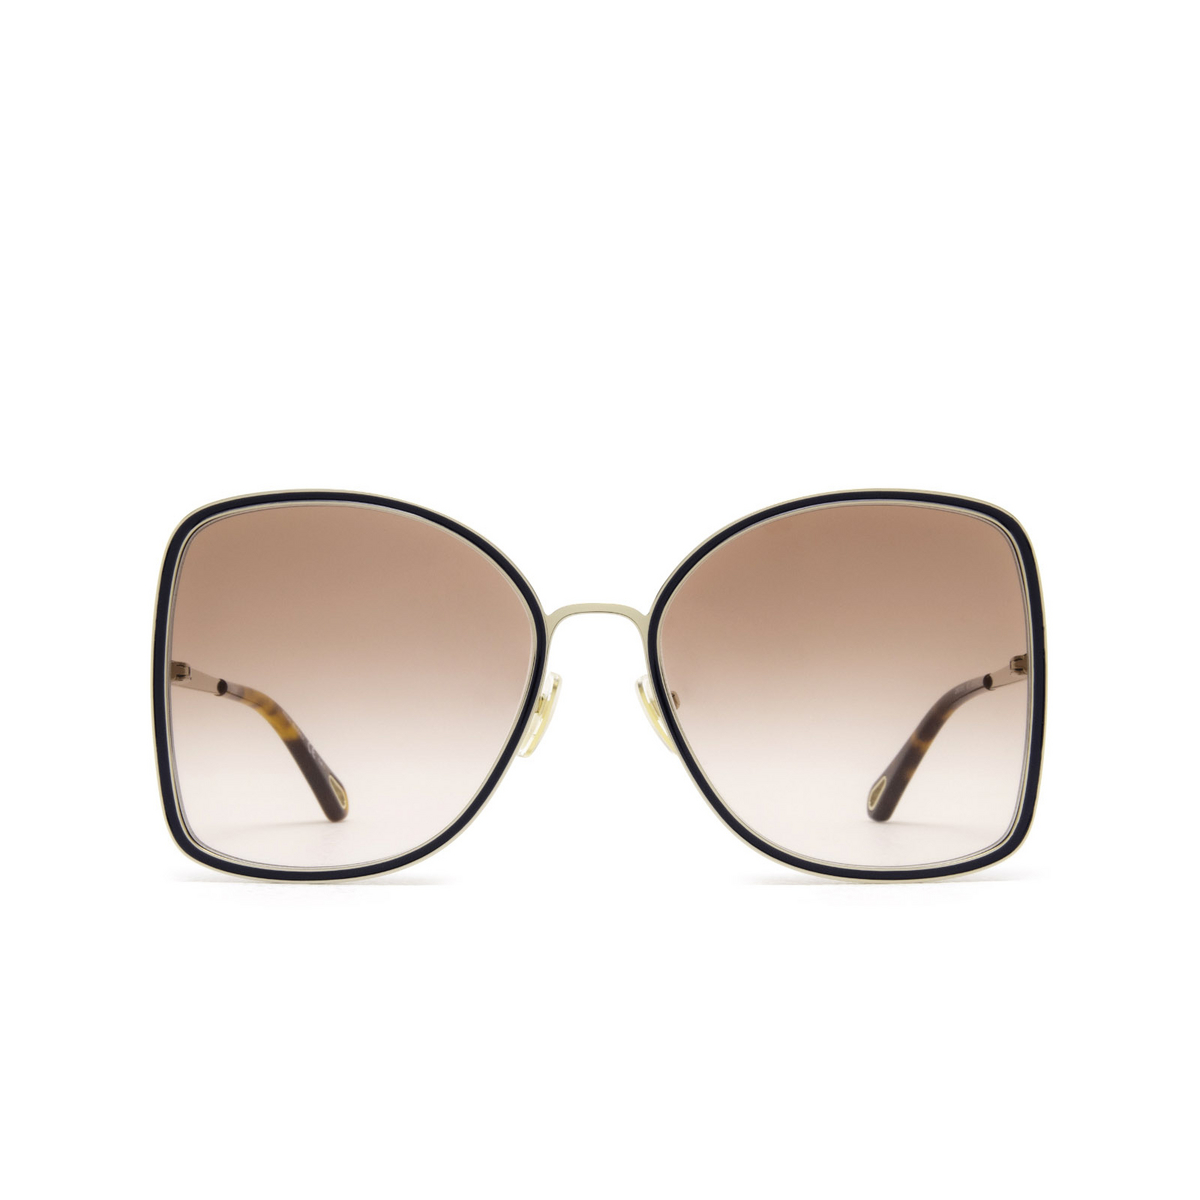 Chloé® Square Sunglasses: CH0101S color Gold & Blue 003 - front view.